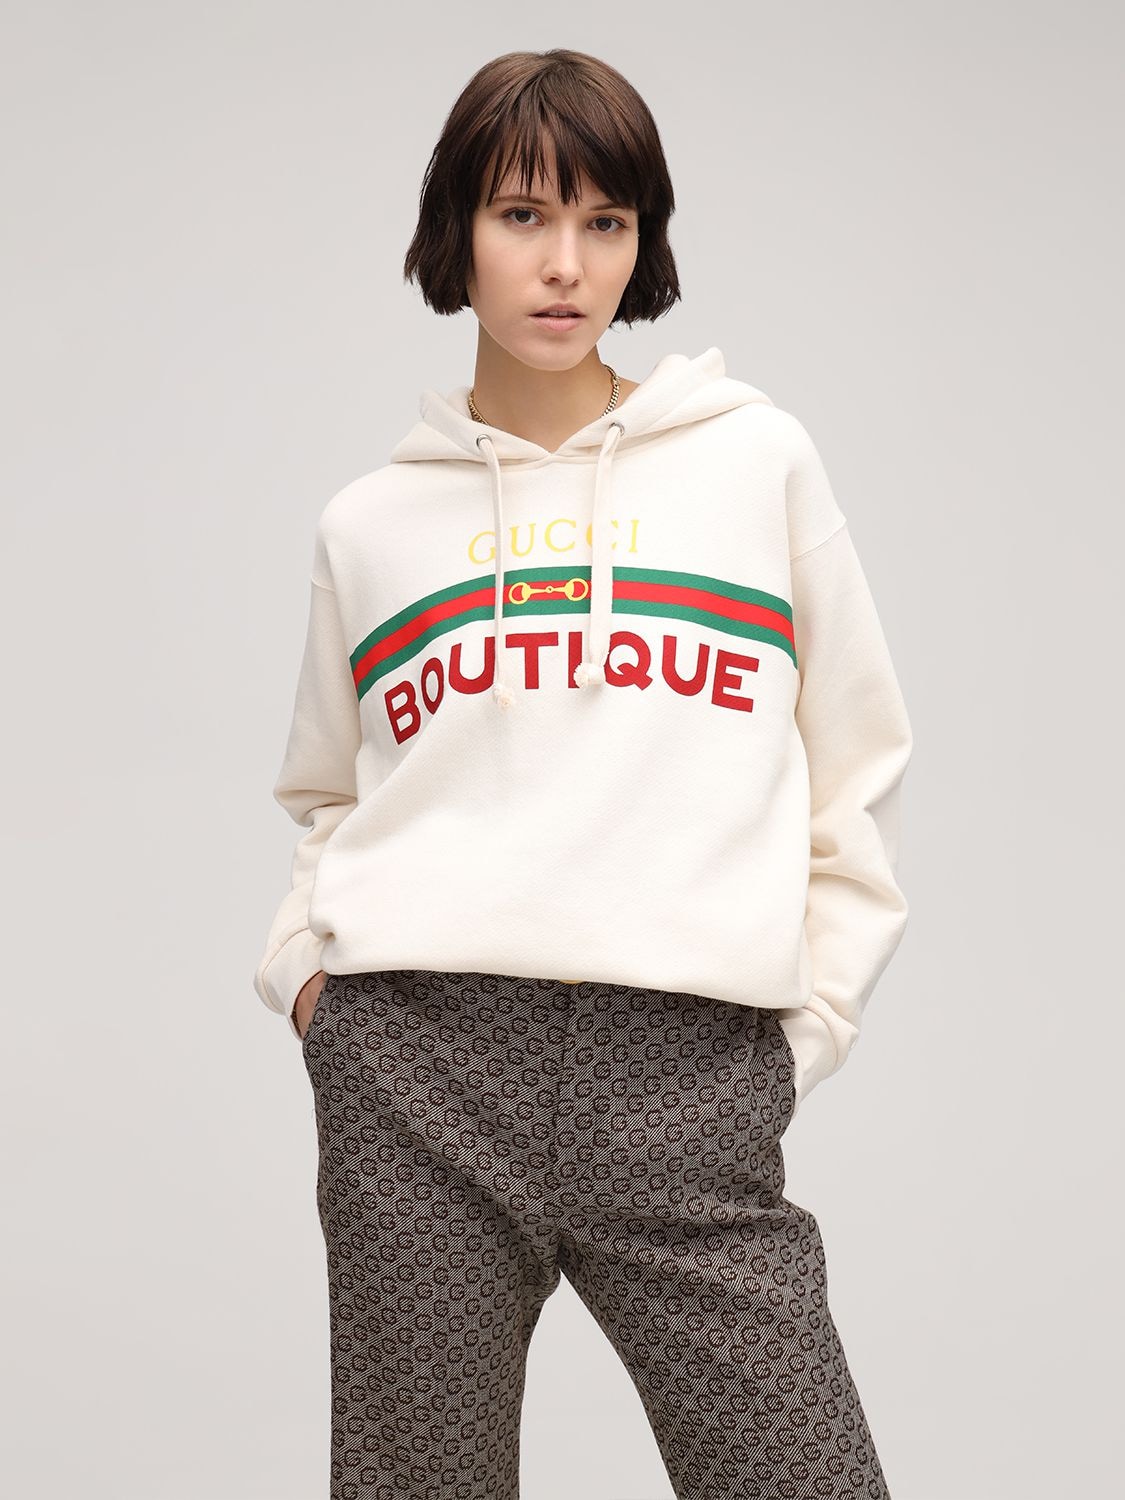 Gucci Boutique Print Sweatshirt